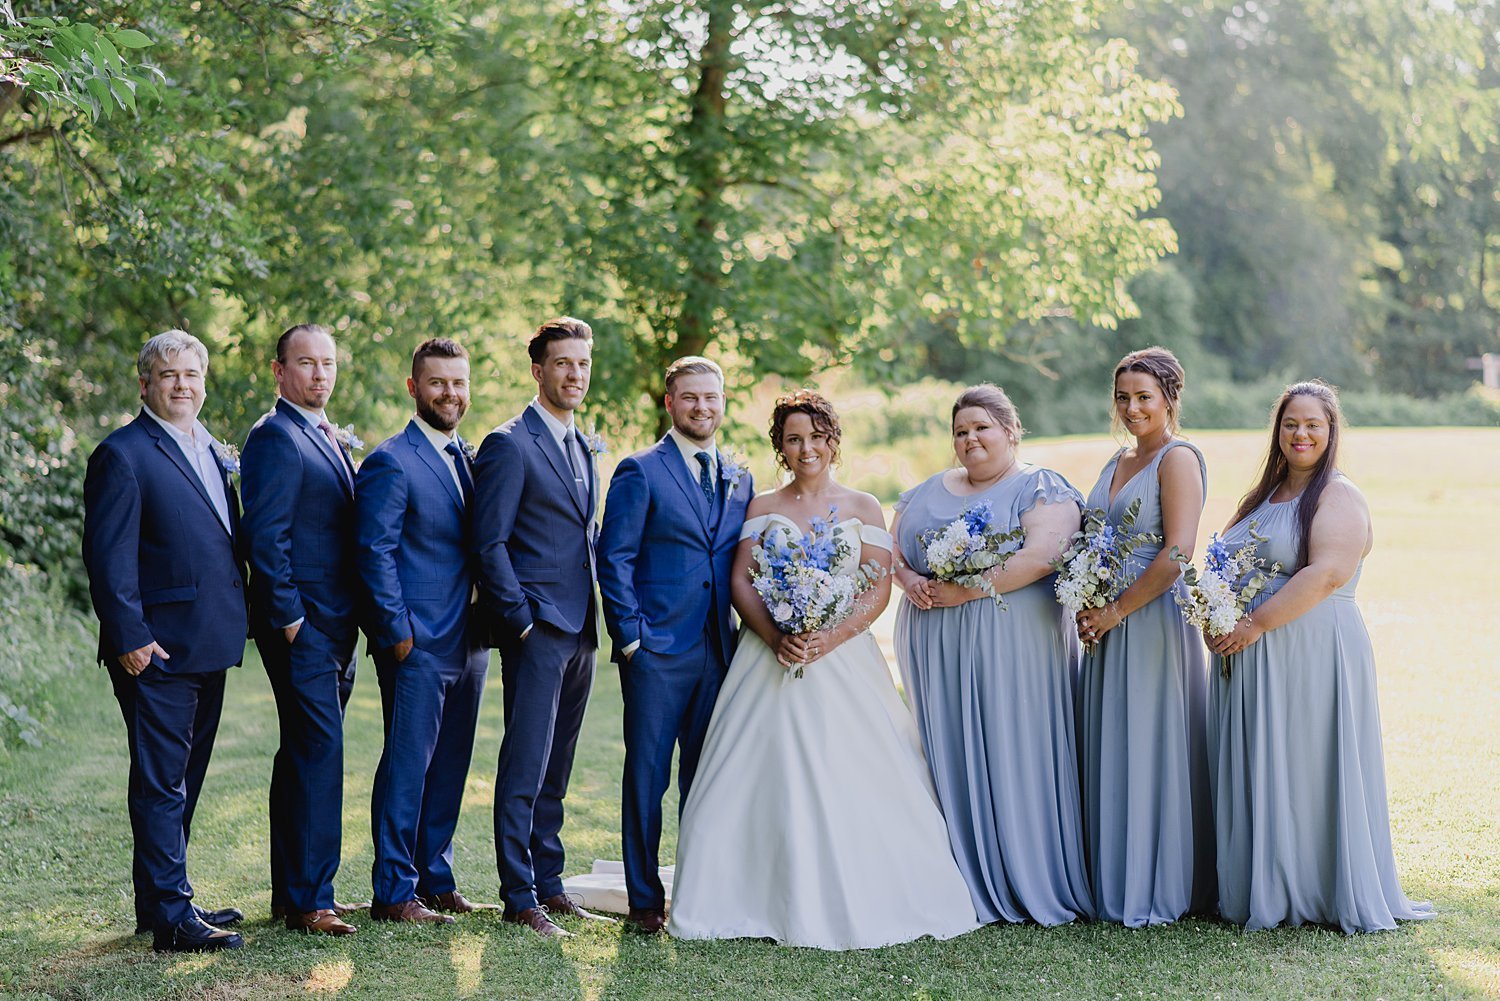 Elegant Summer Backyard Tented Wedding in Sydenham, Ontario | Prince Edward County Wedding Photographer | Holly McMurter Photographs_0066.jpg